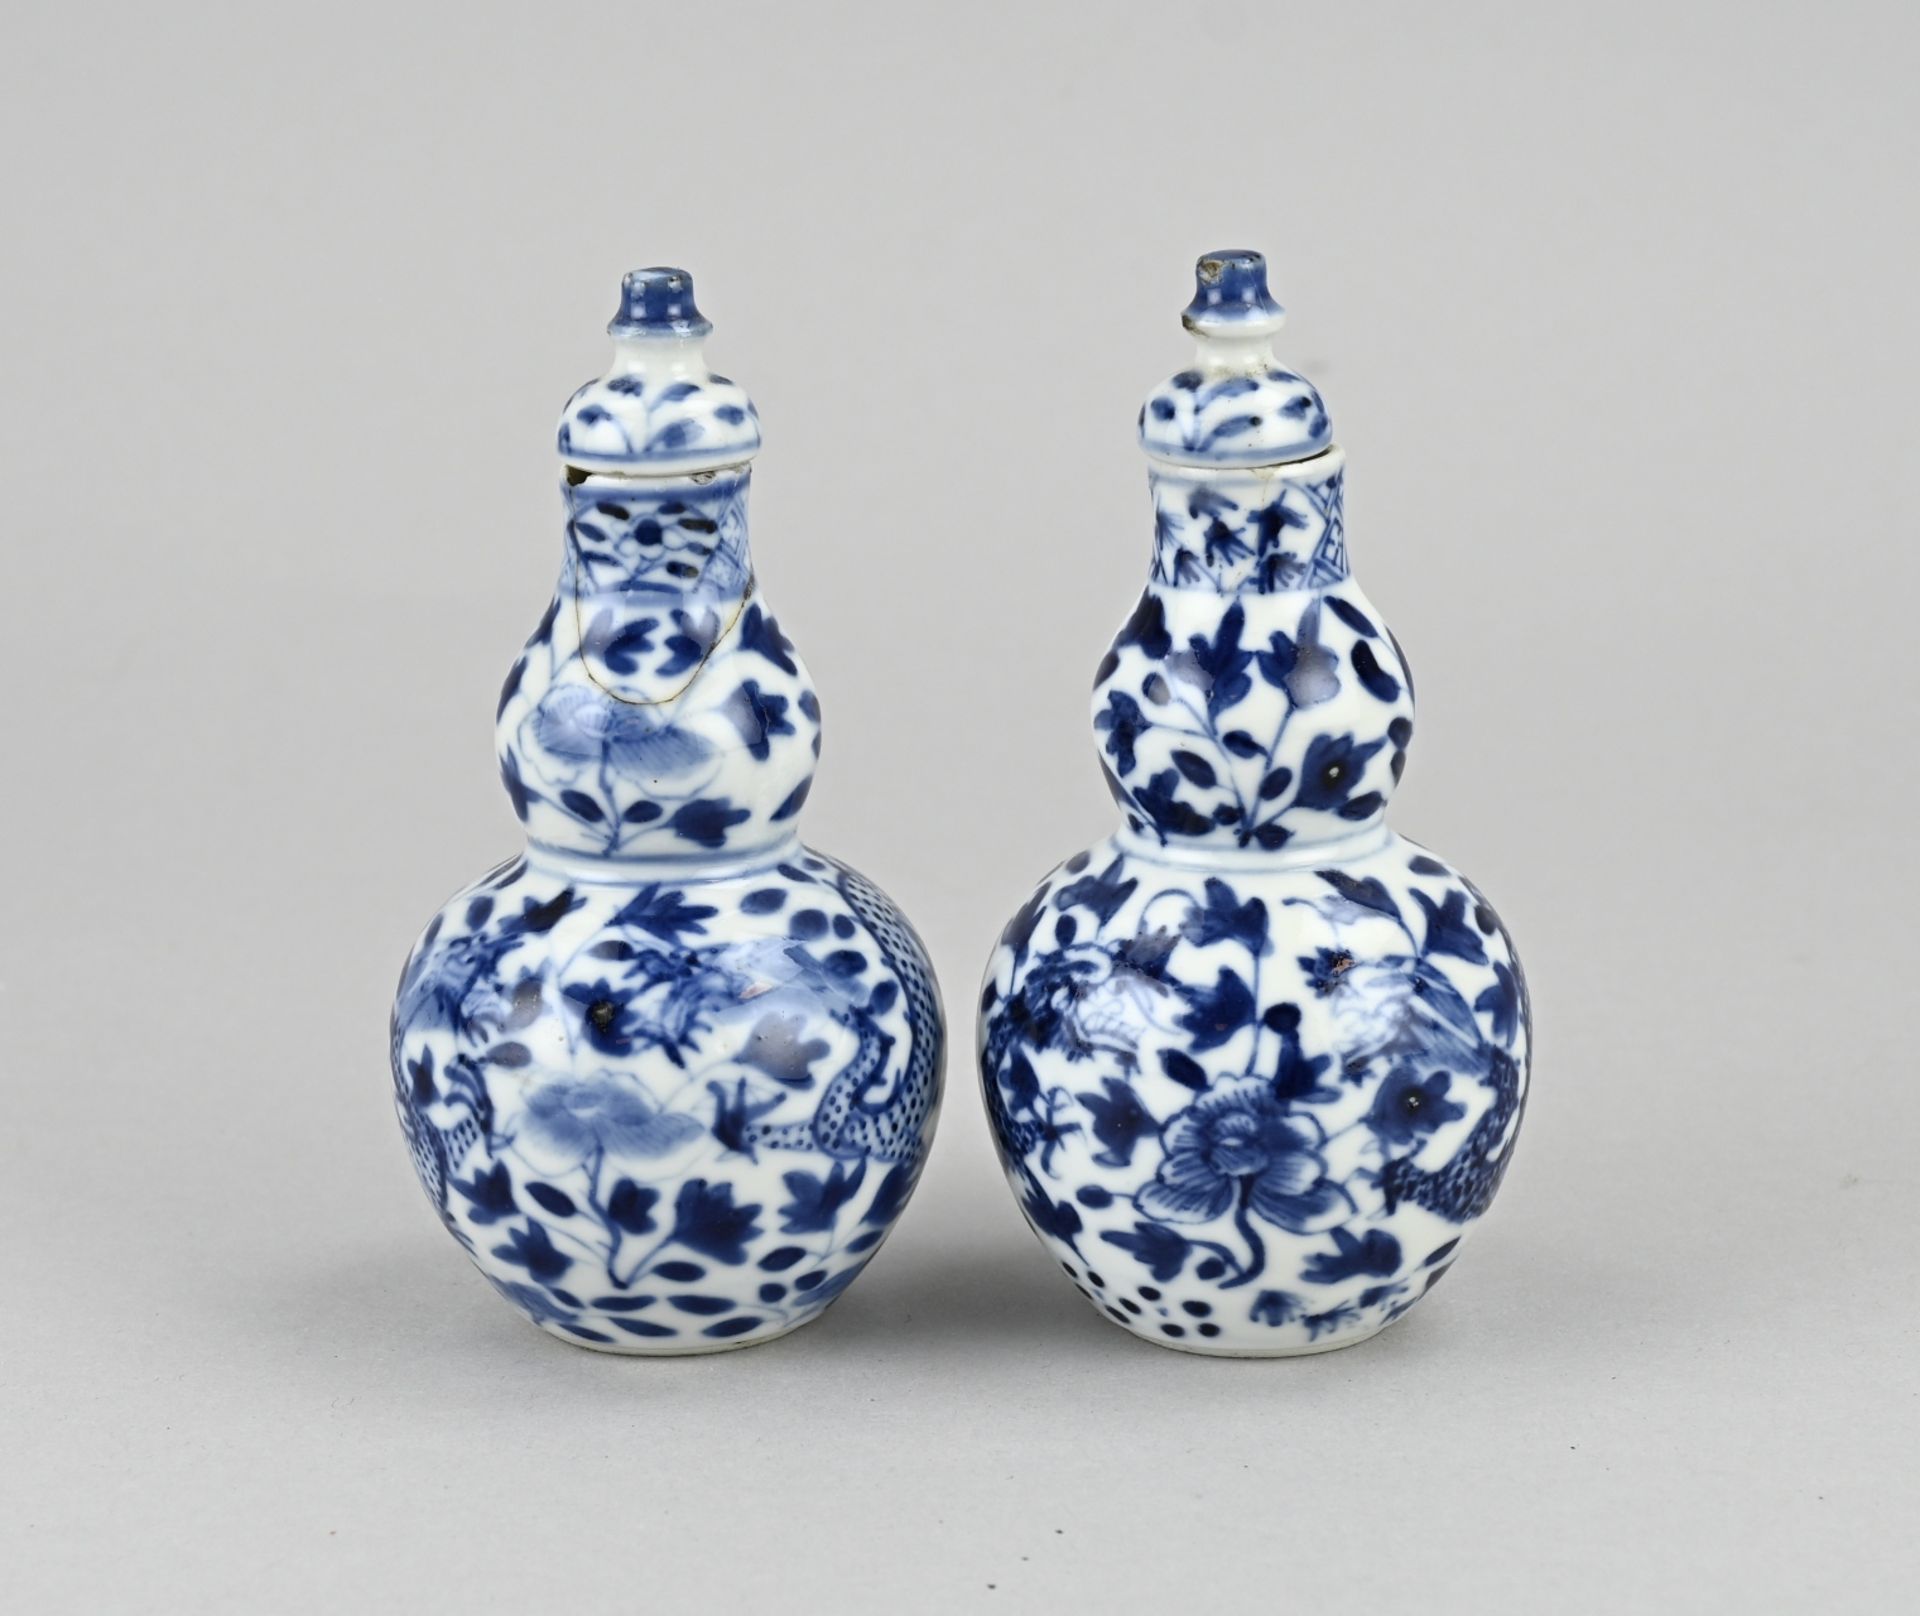 2x Chinese knob vases, H 13 cm.